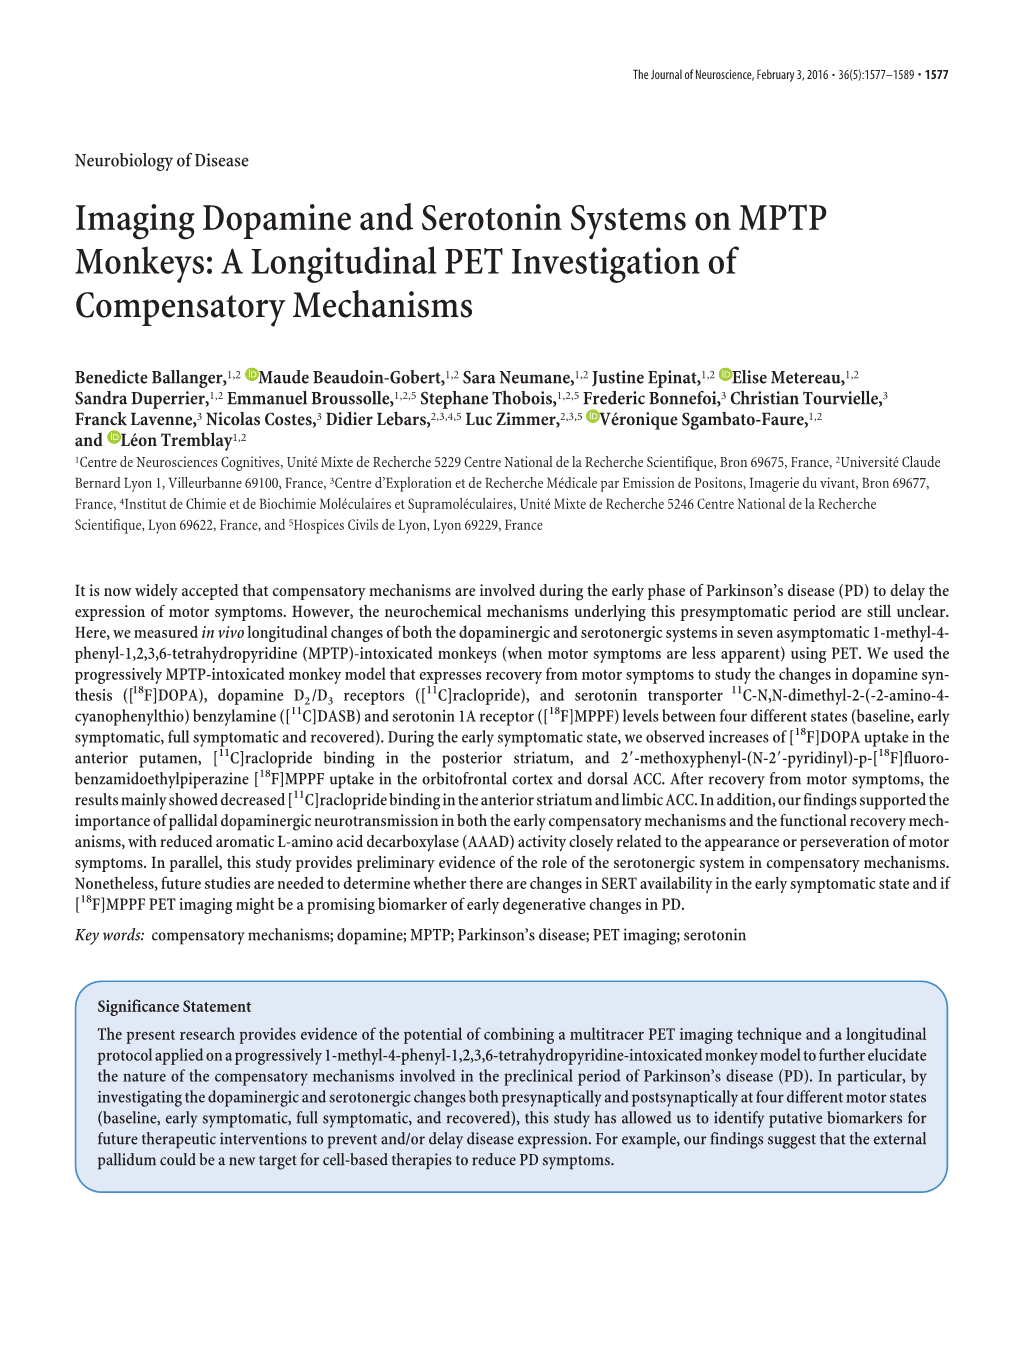 Imaging Dopamine and Serotonin Systems on MPTP Monkeys: a Longitudinal PET Investigation of Compensatory Mechanisms